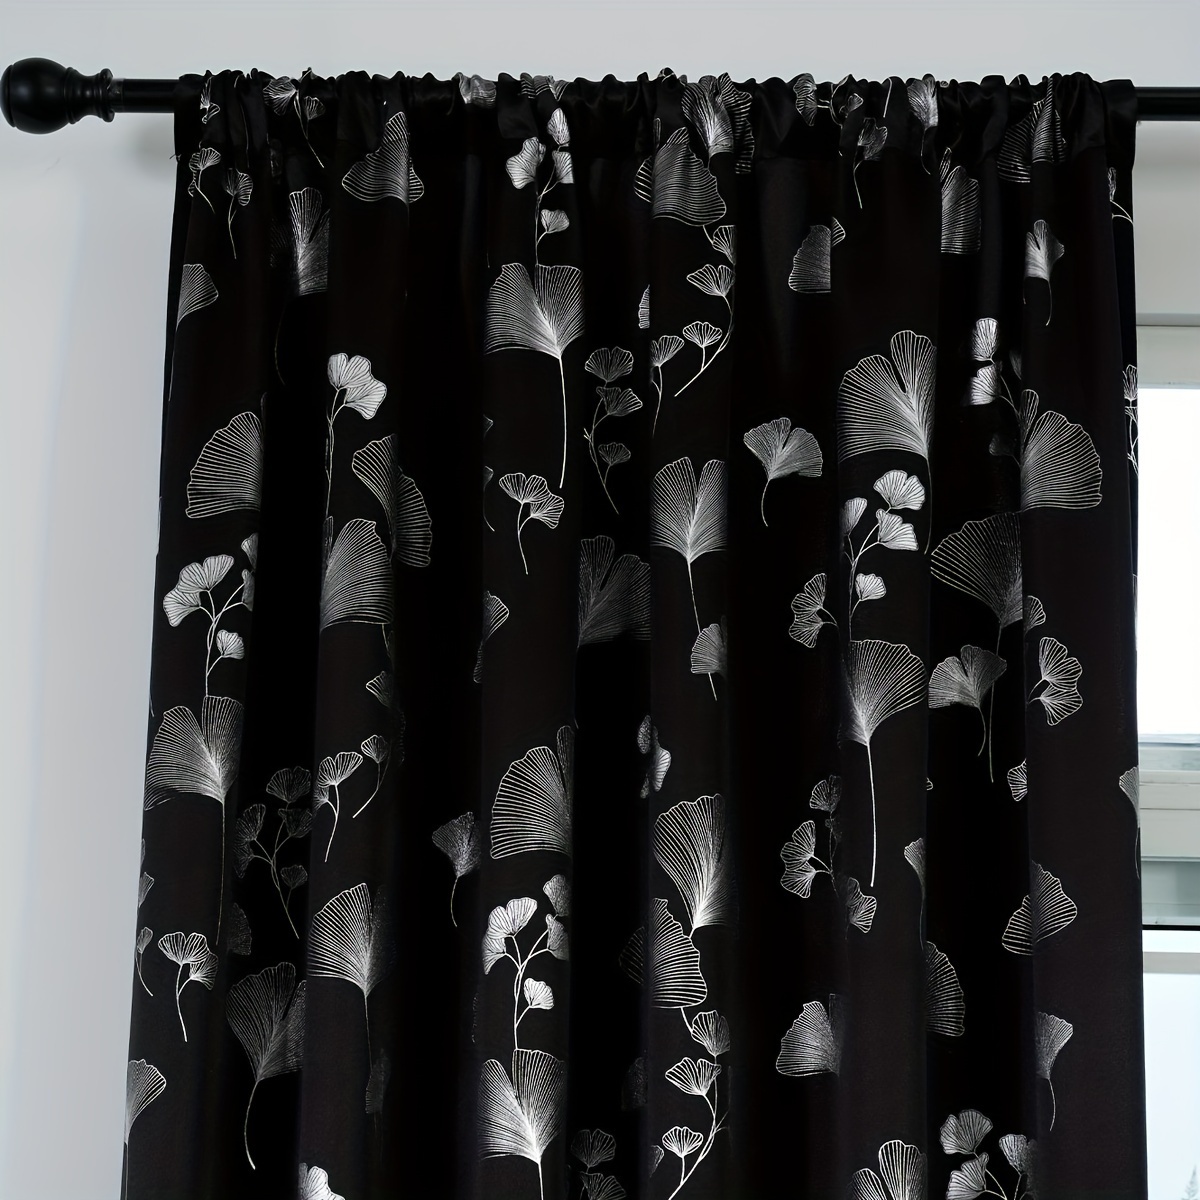 Leaf Print Blackout Curtains for Living Room Bedroom Window